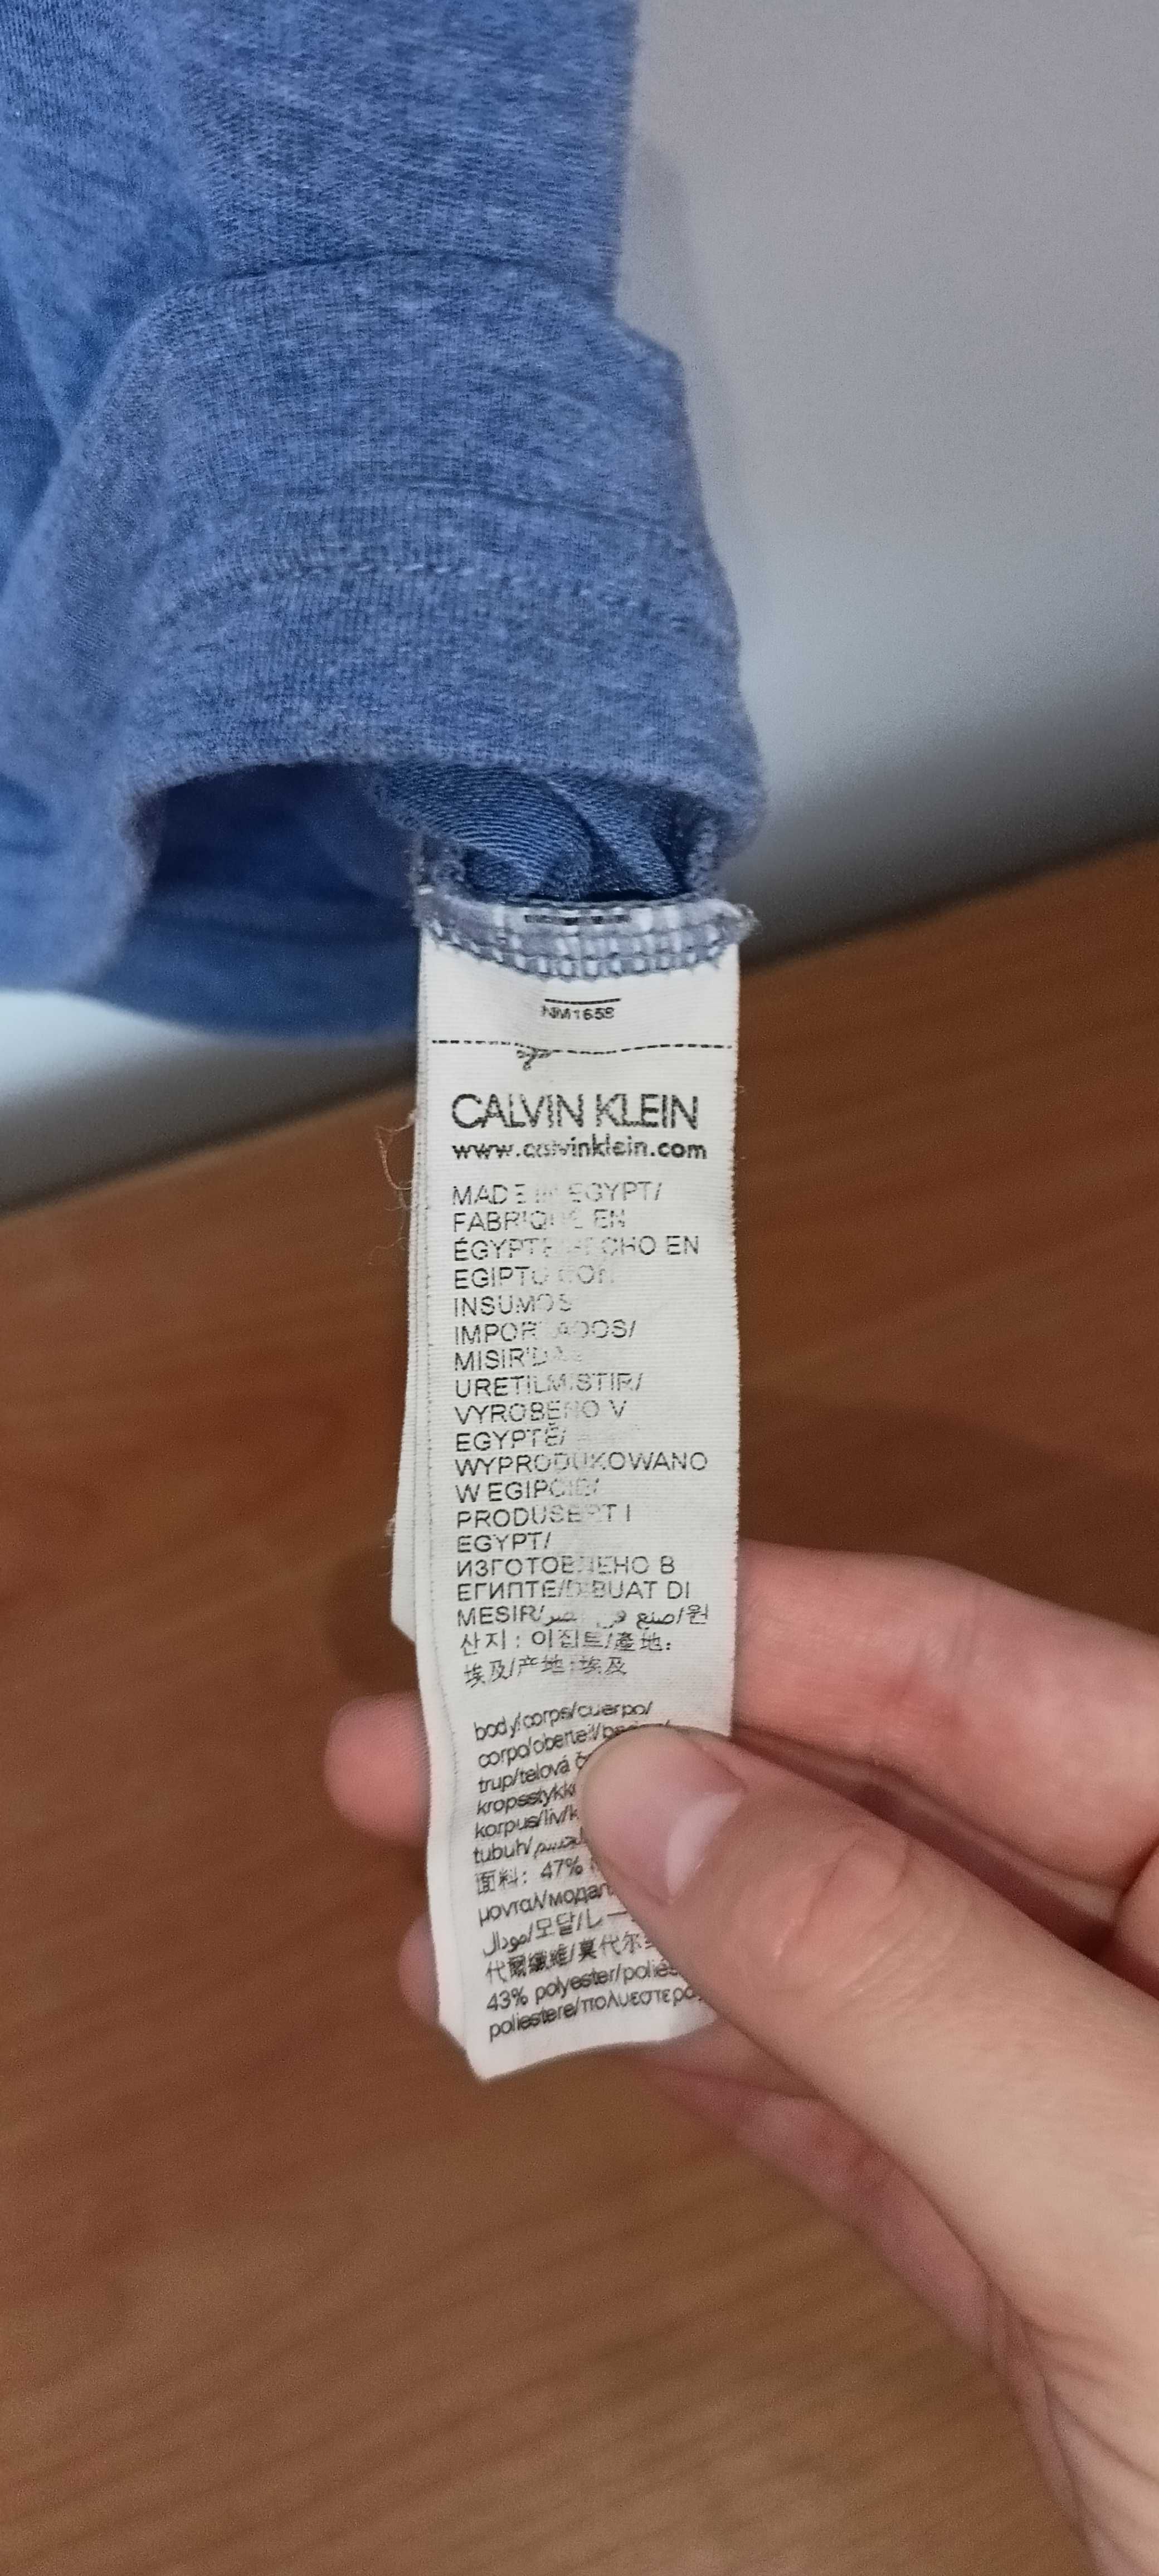 Bluzka t-shirt Calvin Klein